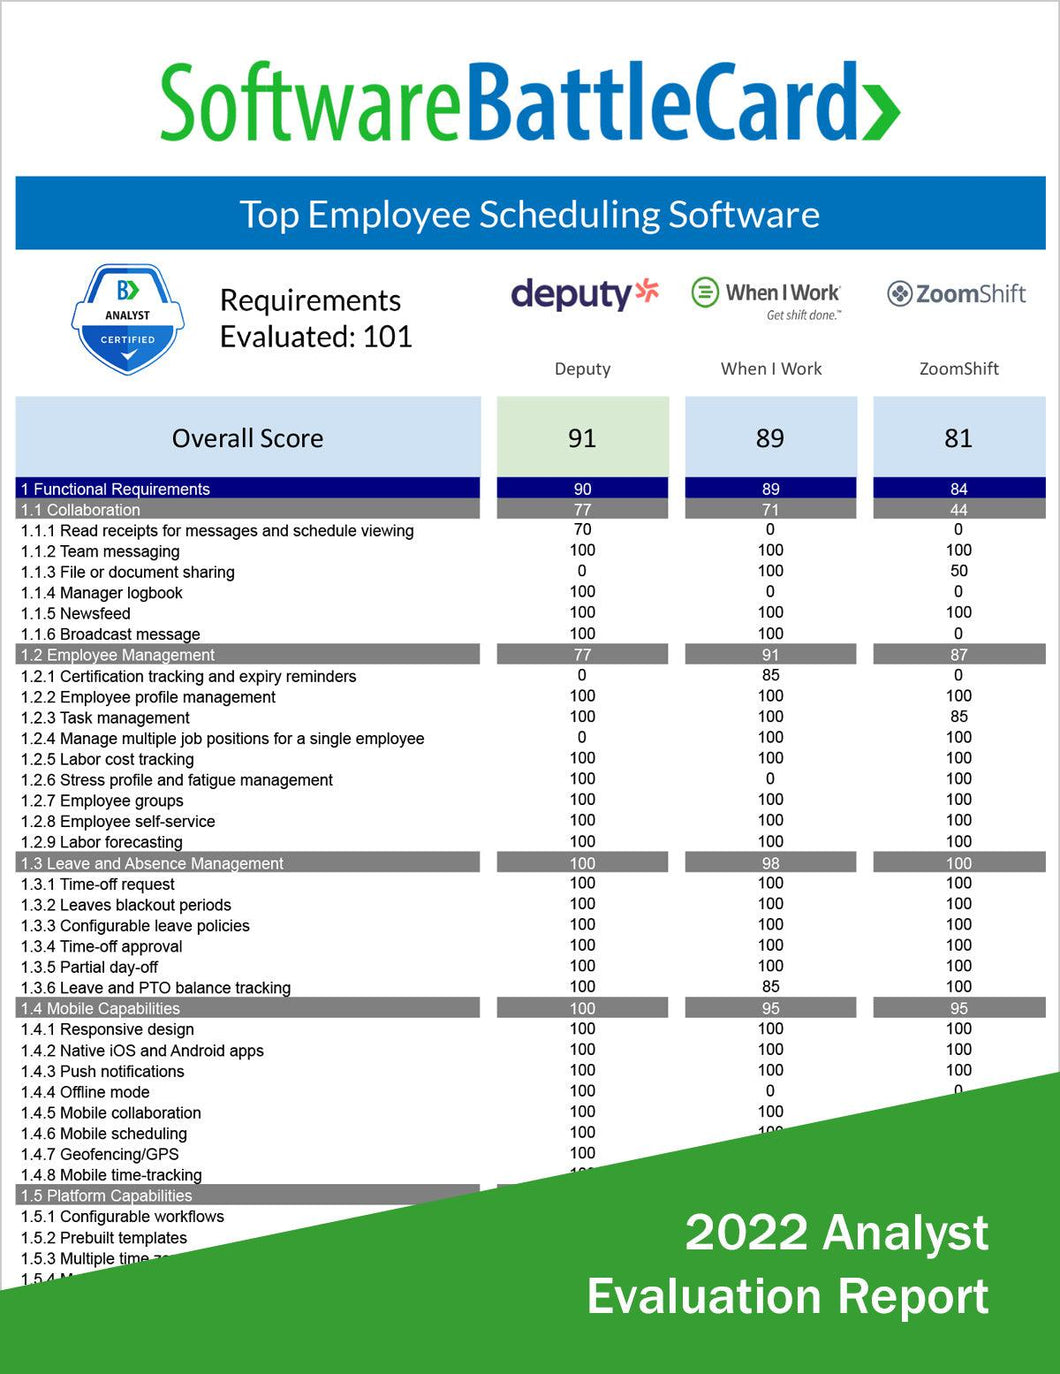 Employee Scheduling Software Battlecard: Deputy vs. When I Work vs. ZoomShift